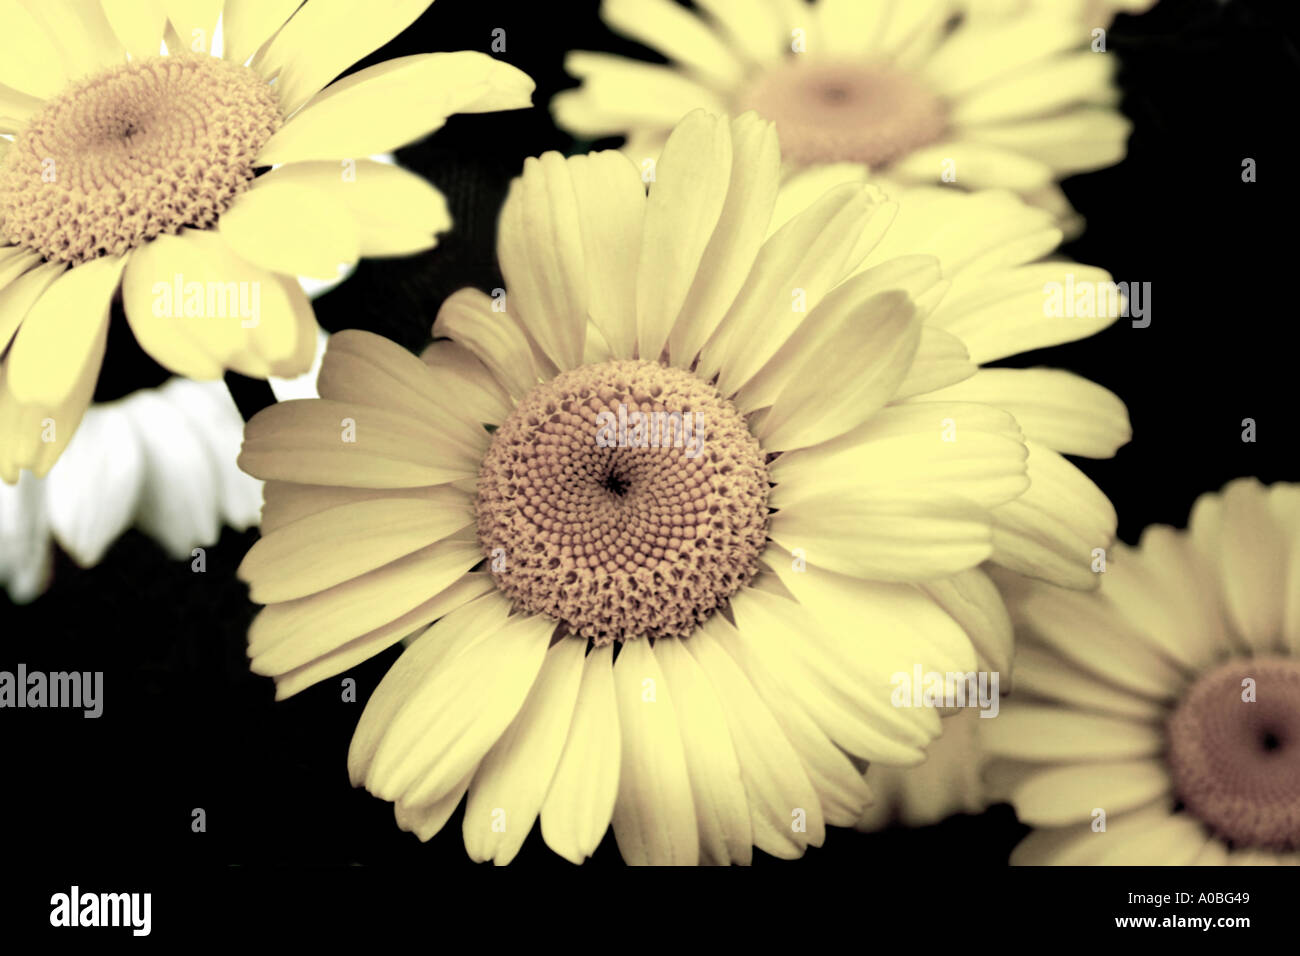 Daisy flowers Digitally manipulated Stock Photo